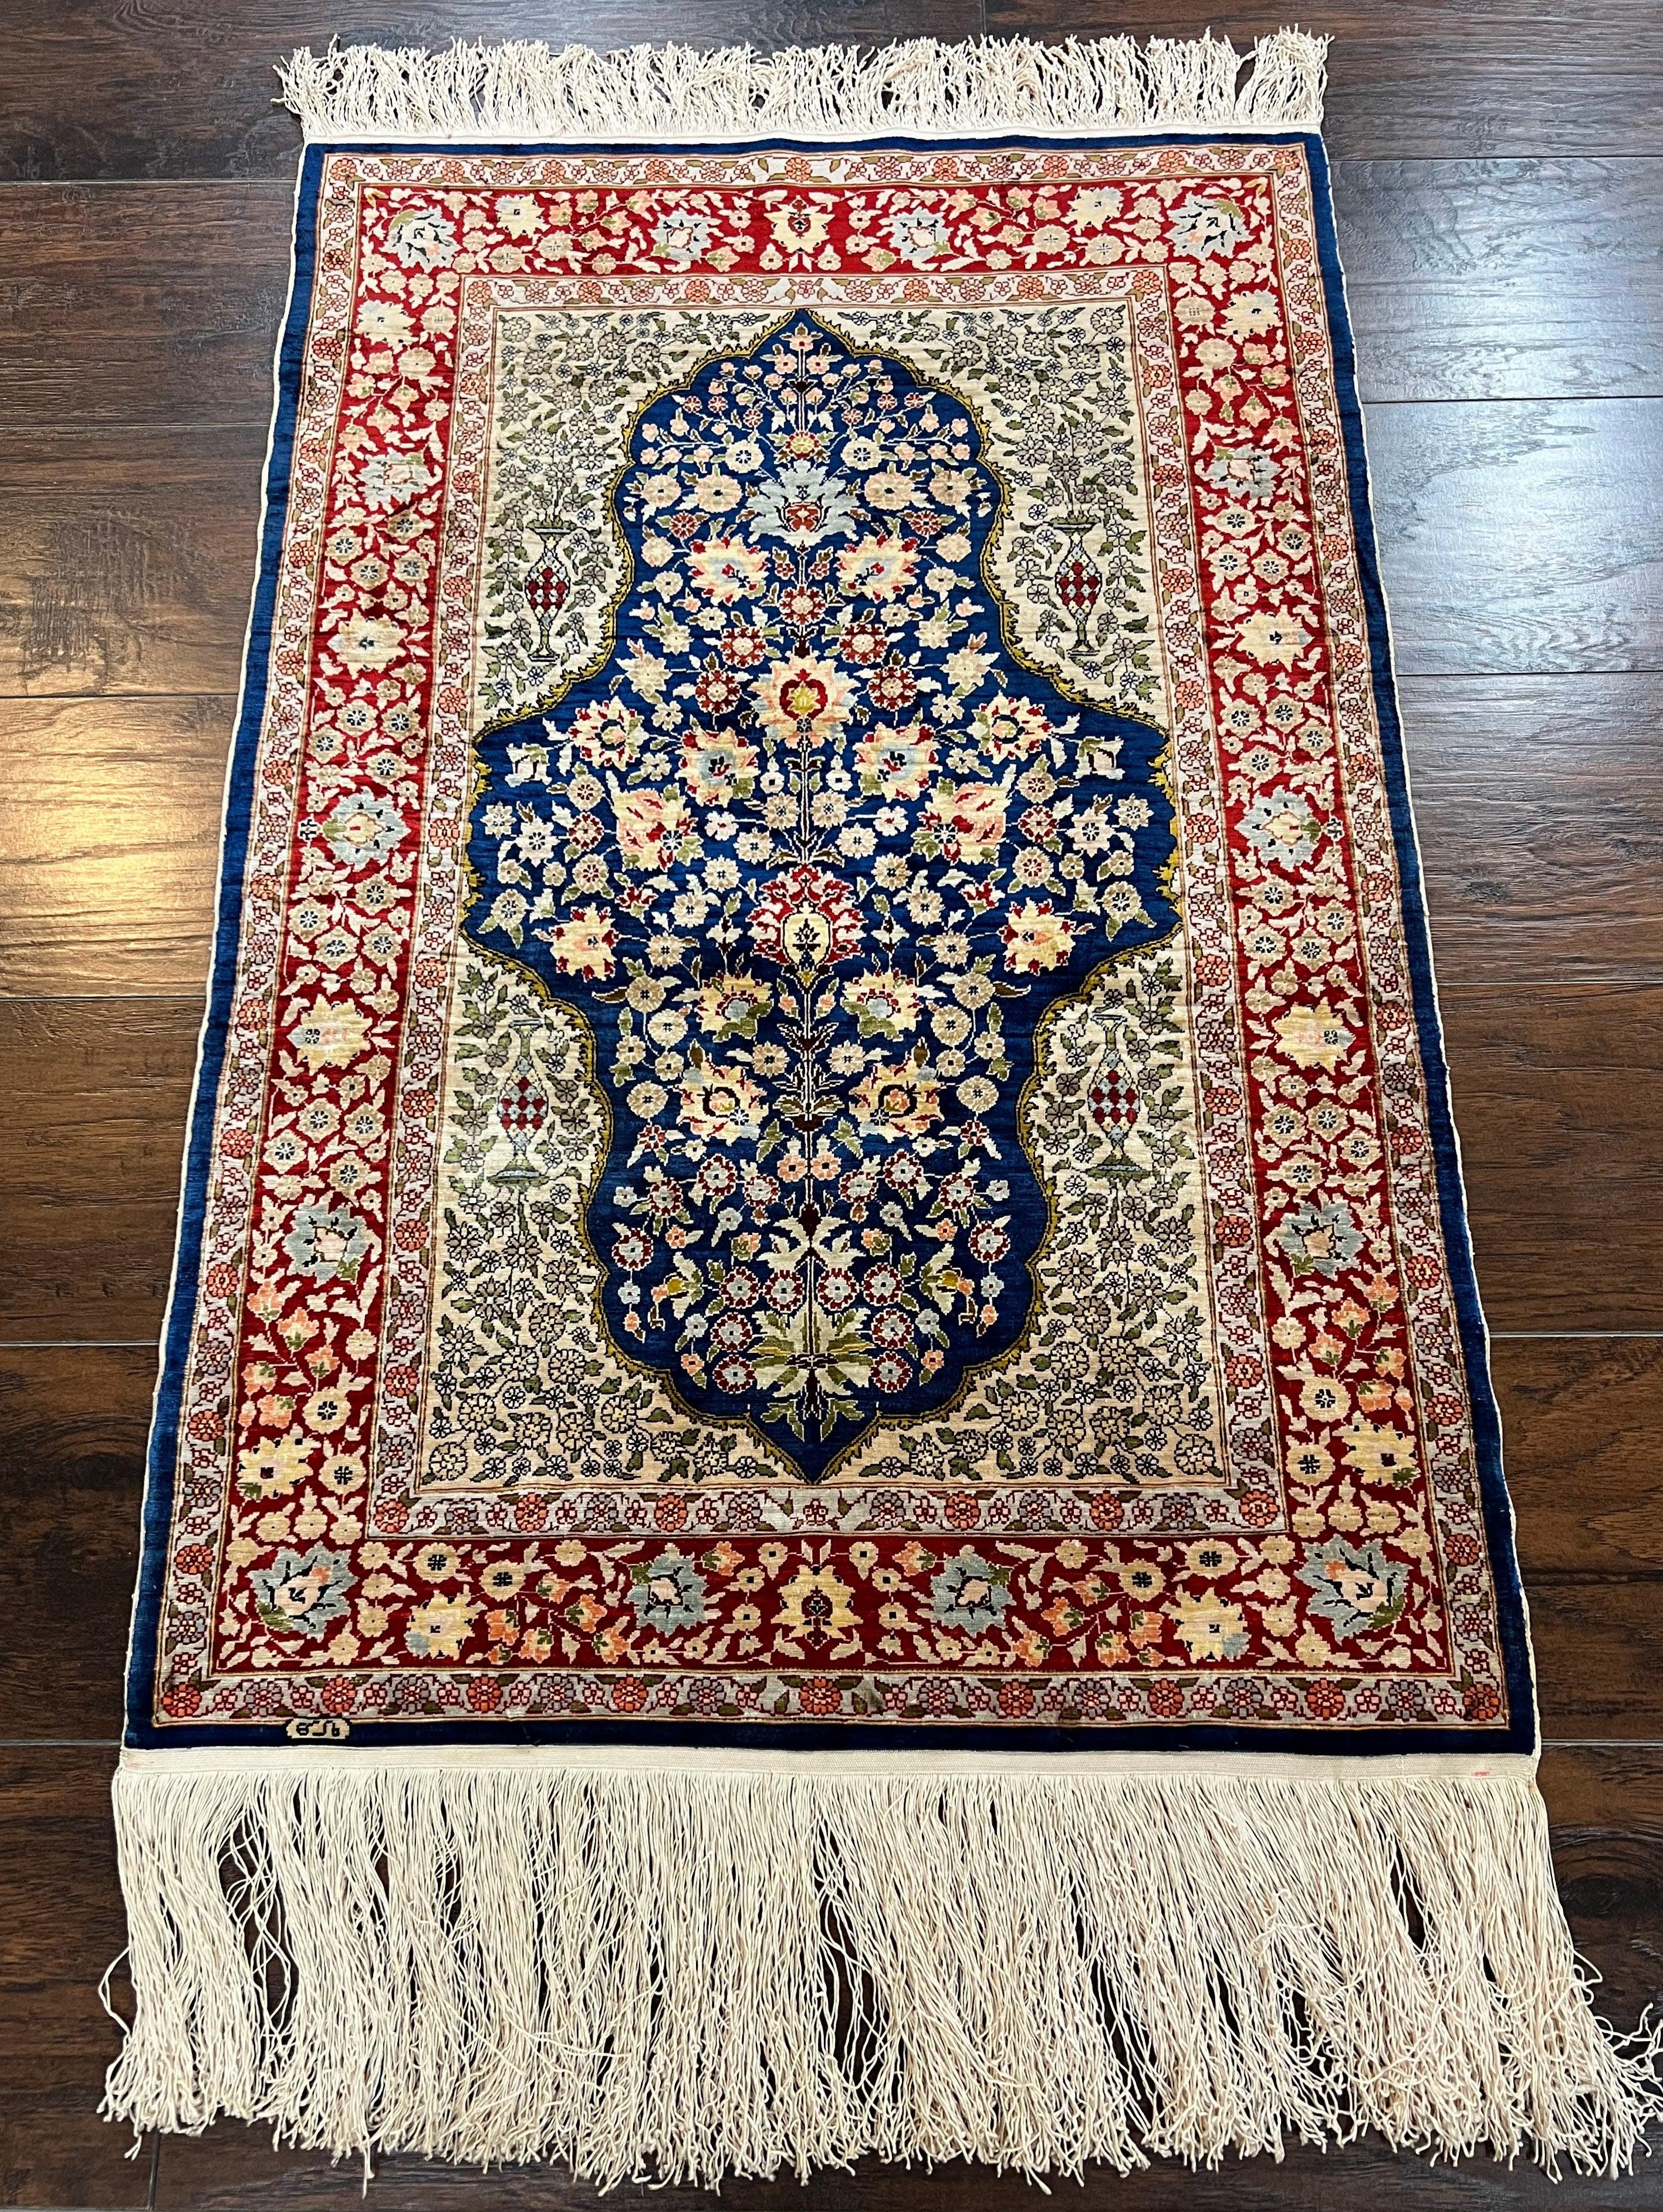 2'4 x 3'5 Turkish Oriental Rug - Full Pile - Wool and Silk - Hand Made